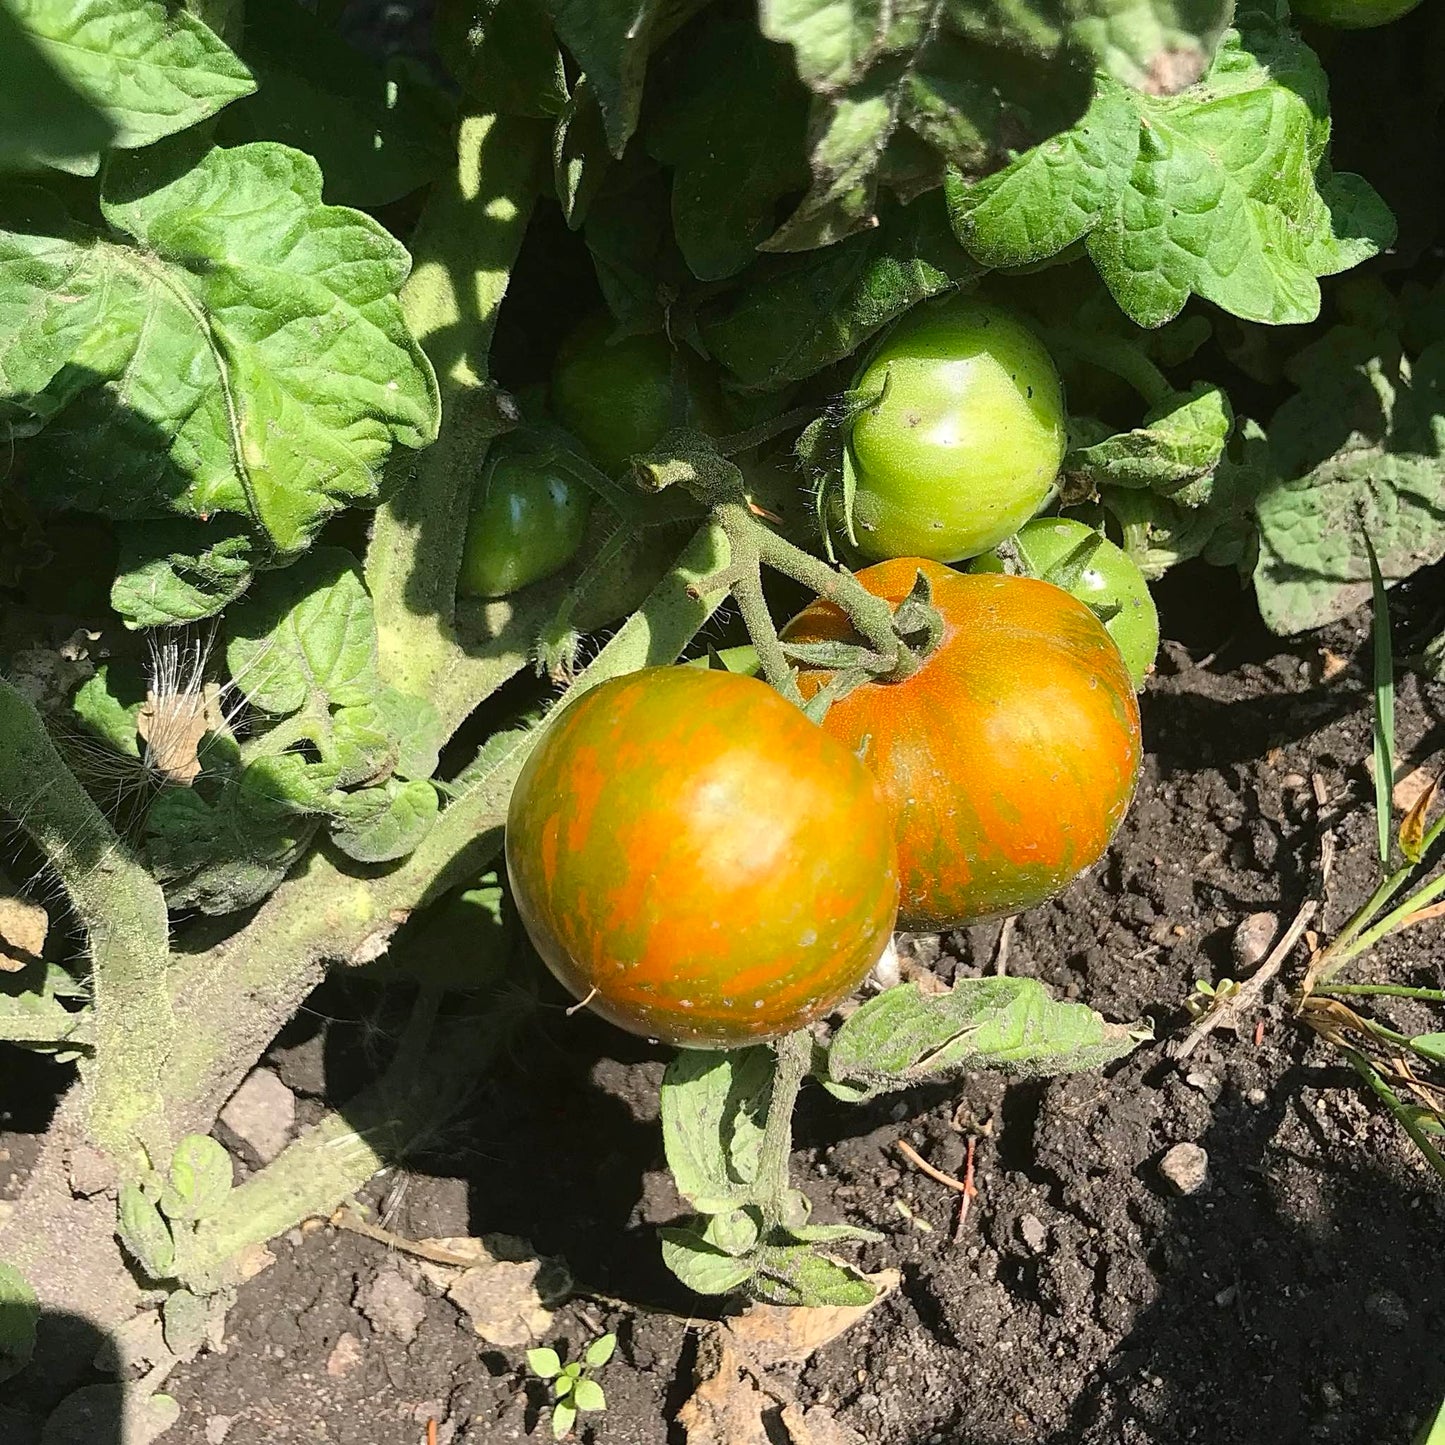 Two sarandipity tomatoes halfway to ripeness.